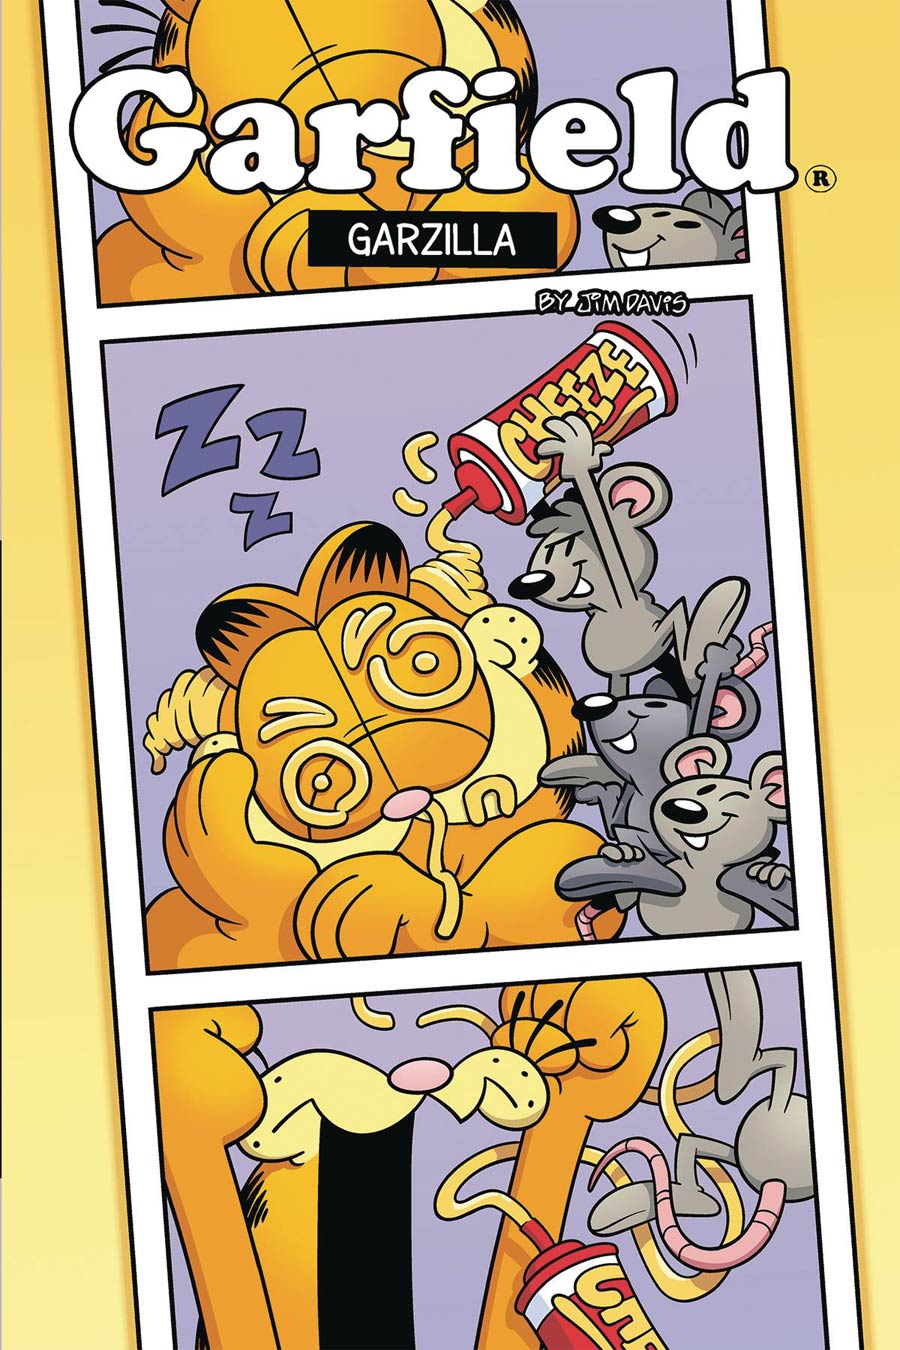 Garfield Original Graphic Novel Vol 7 Garzilla TP